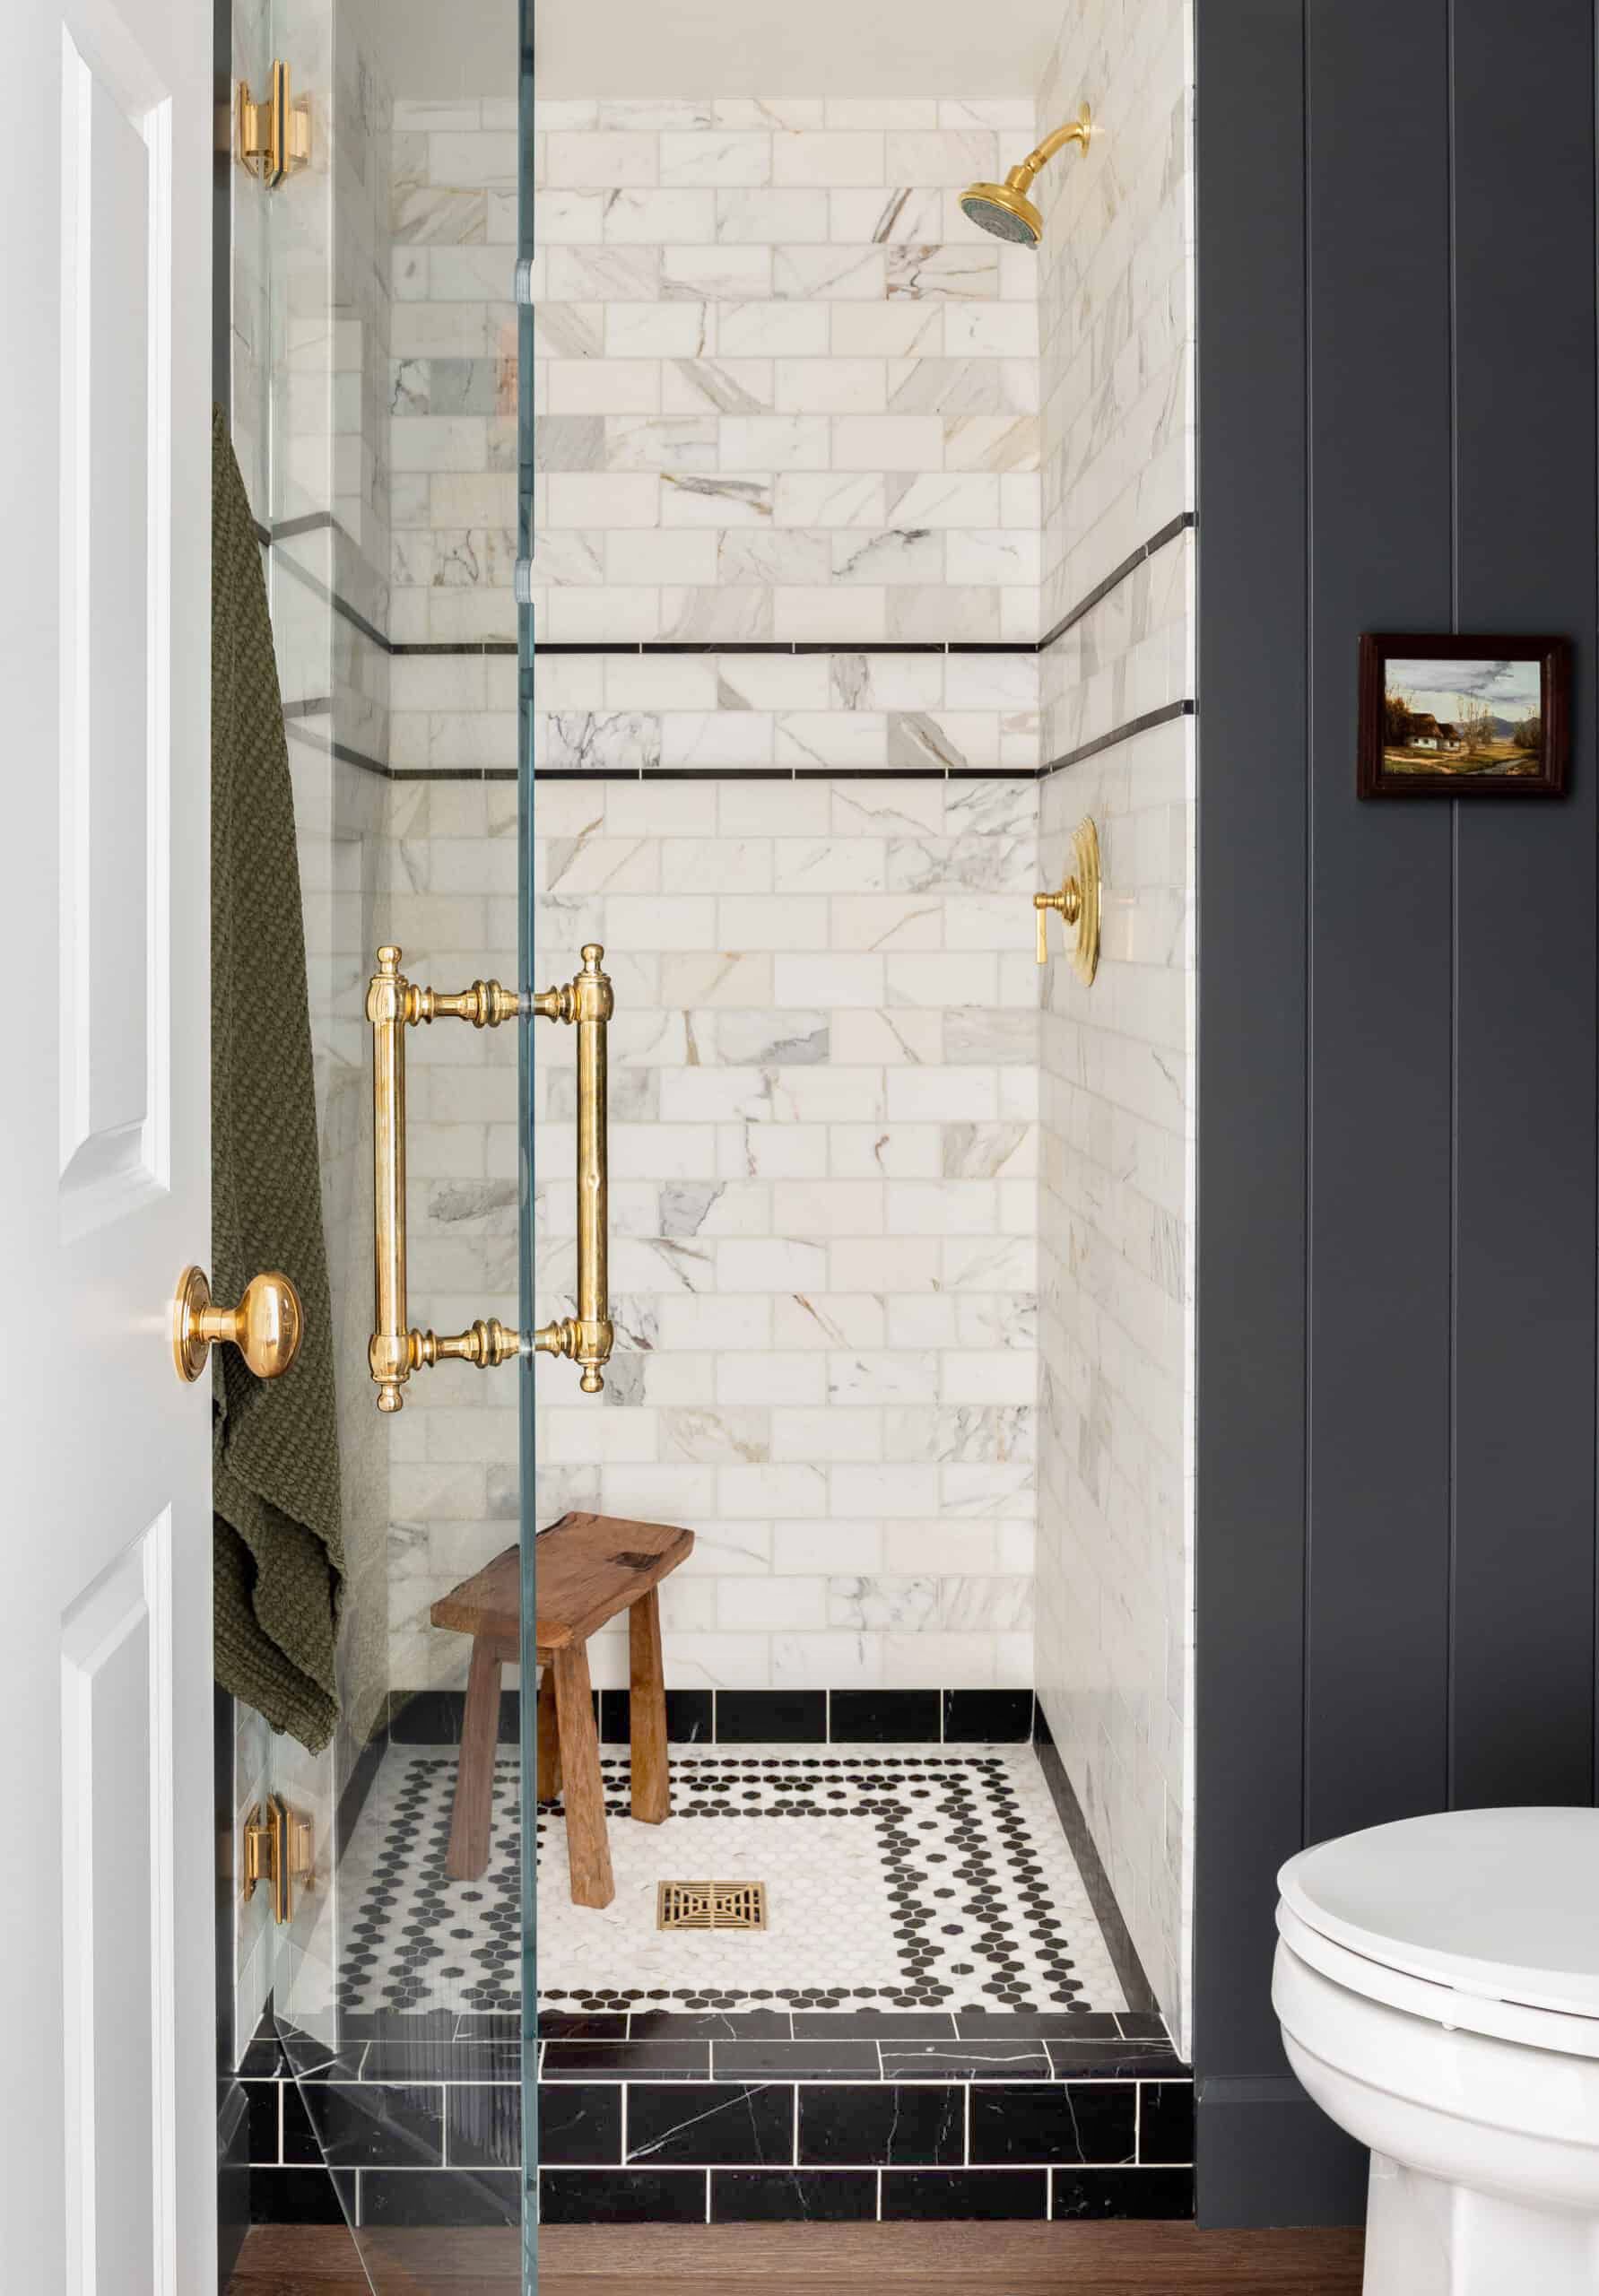 18 Bathroom Tile Ideas   Bath Tile Backsplash and Floor Designs